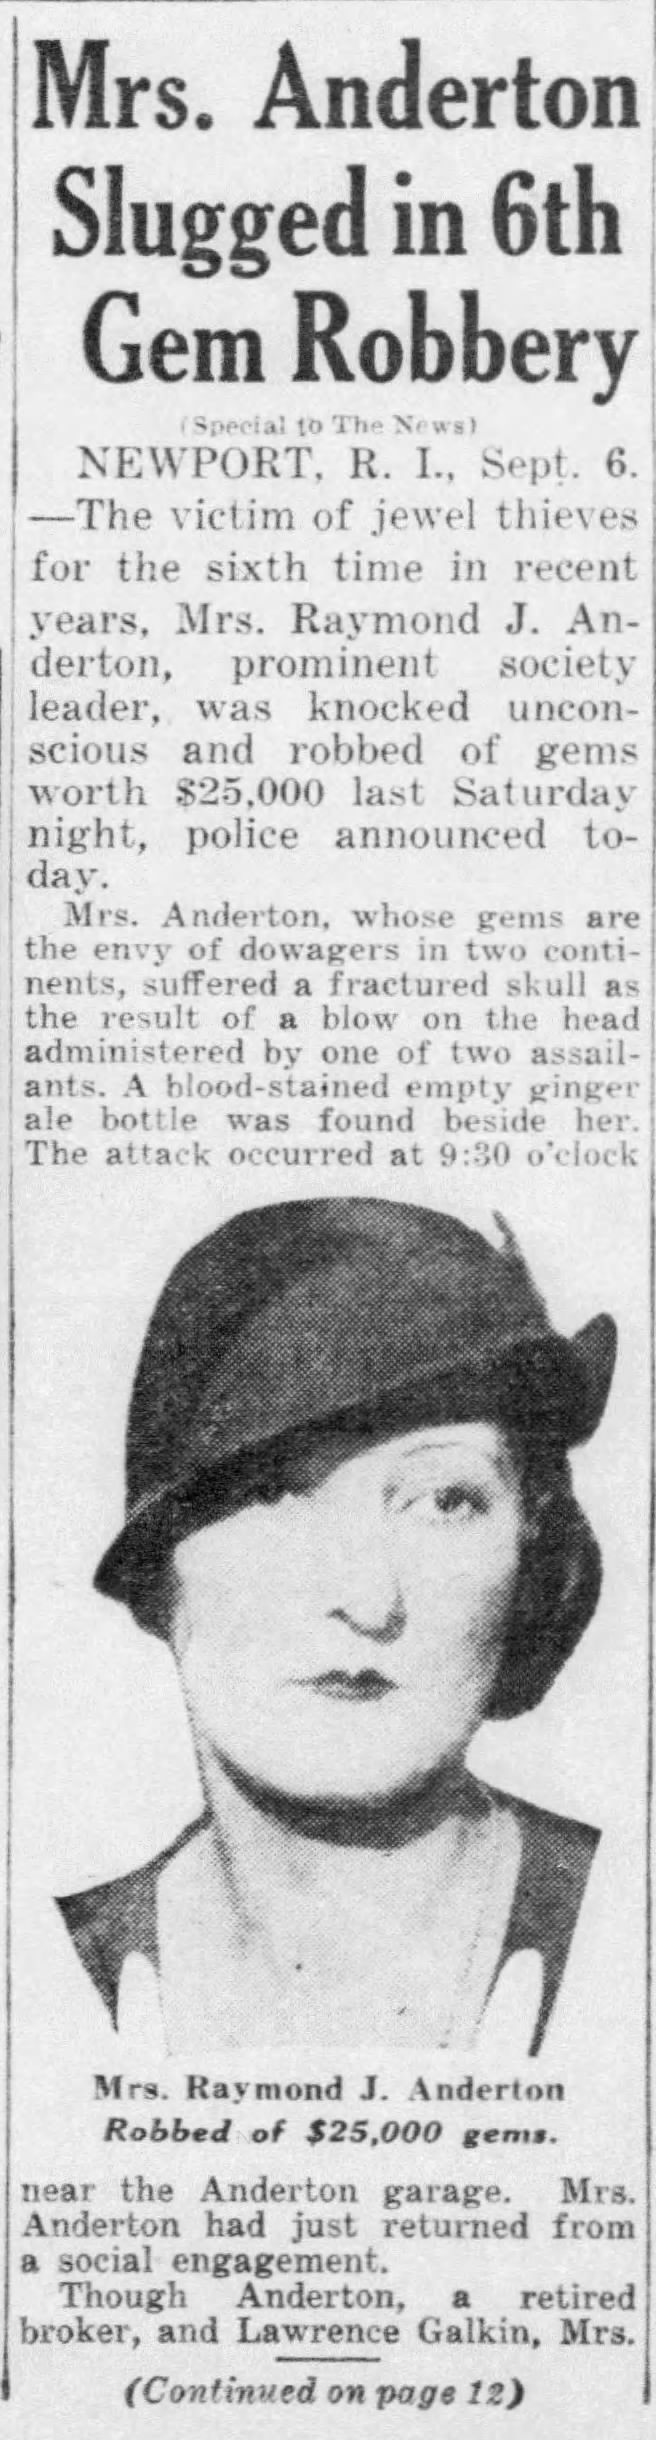 Mrs. Raymond Anderton